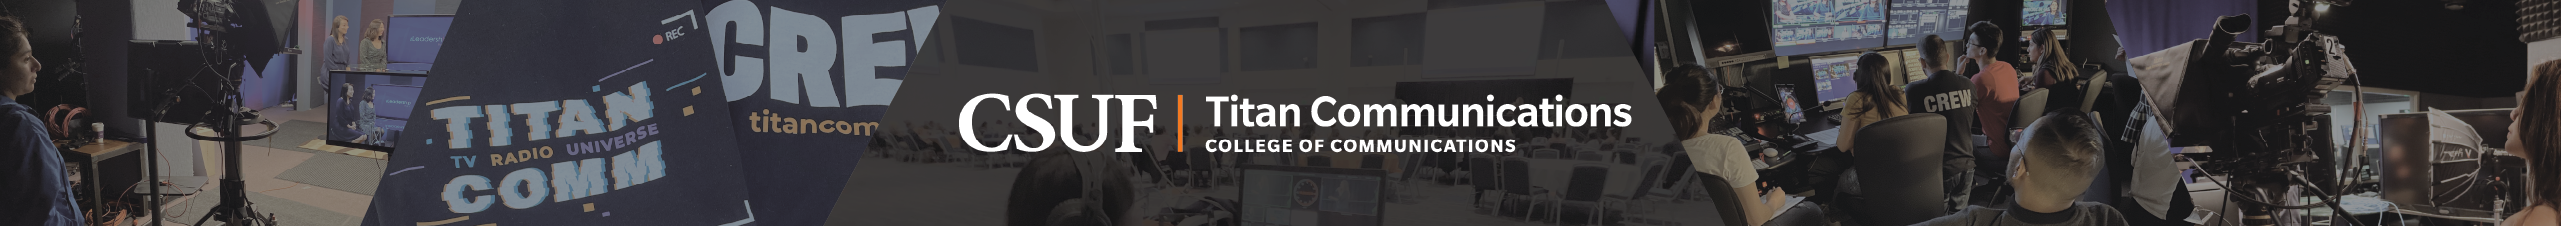 titan comm banner